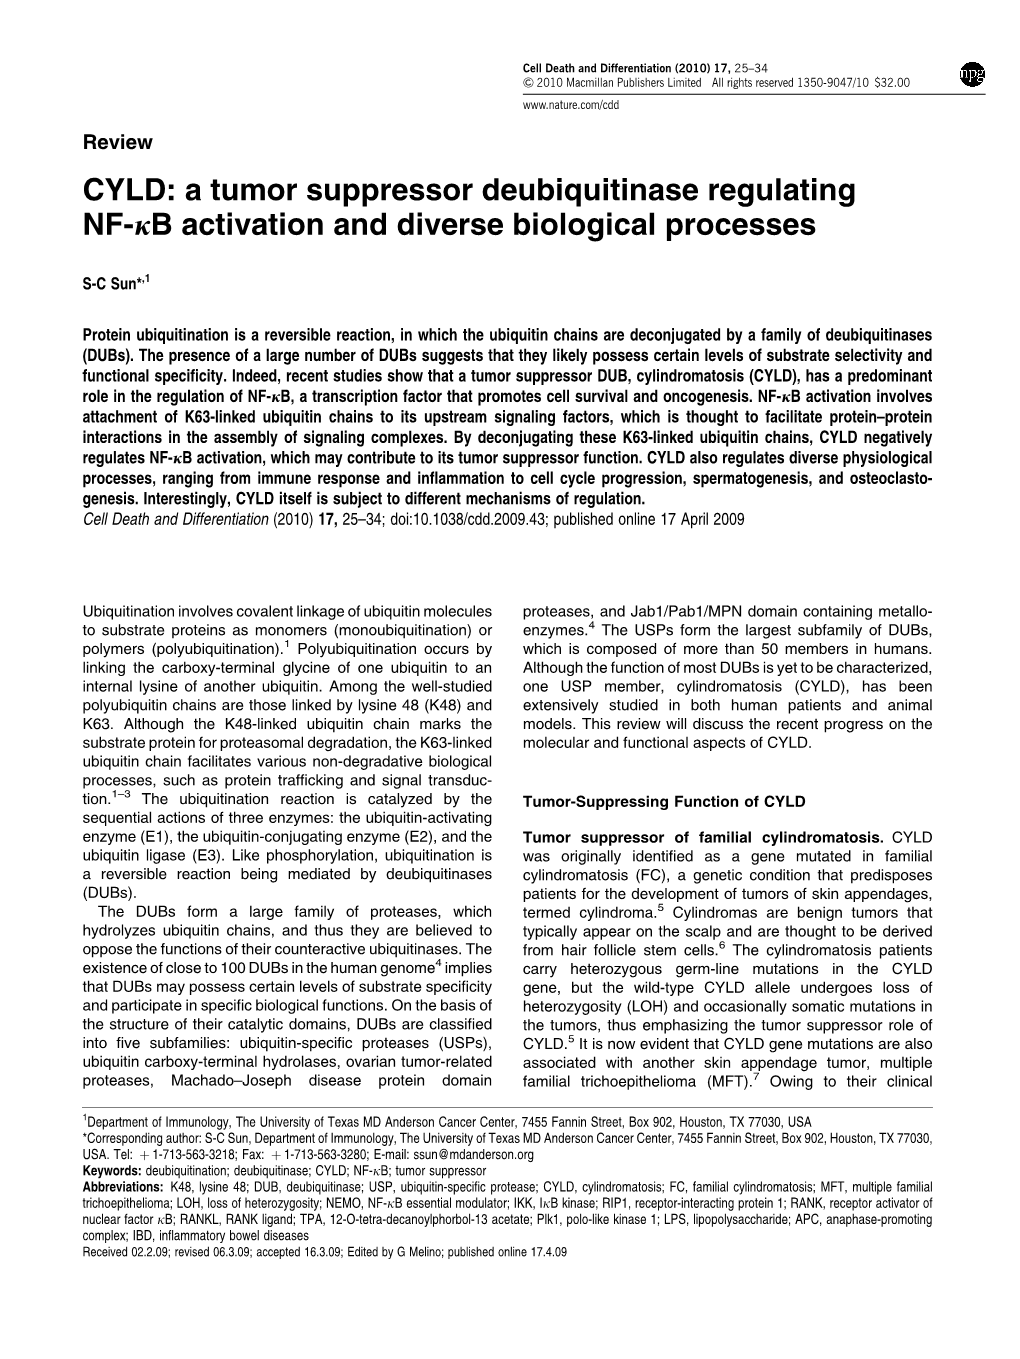 CYLD: a Tumor Suppressor Deubiquitinase Regulating NF-Jb Activation and Diverse Biological Processes